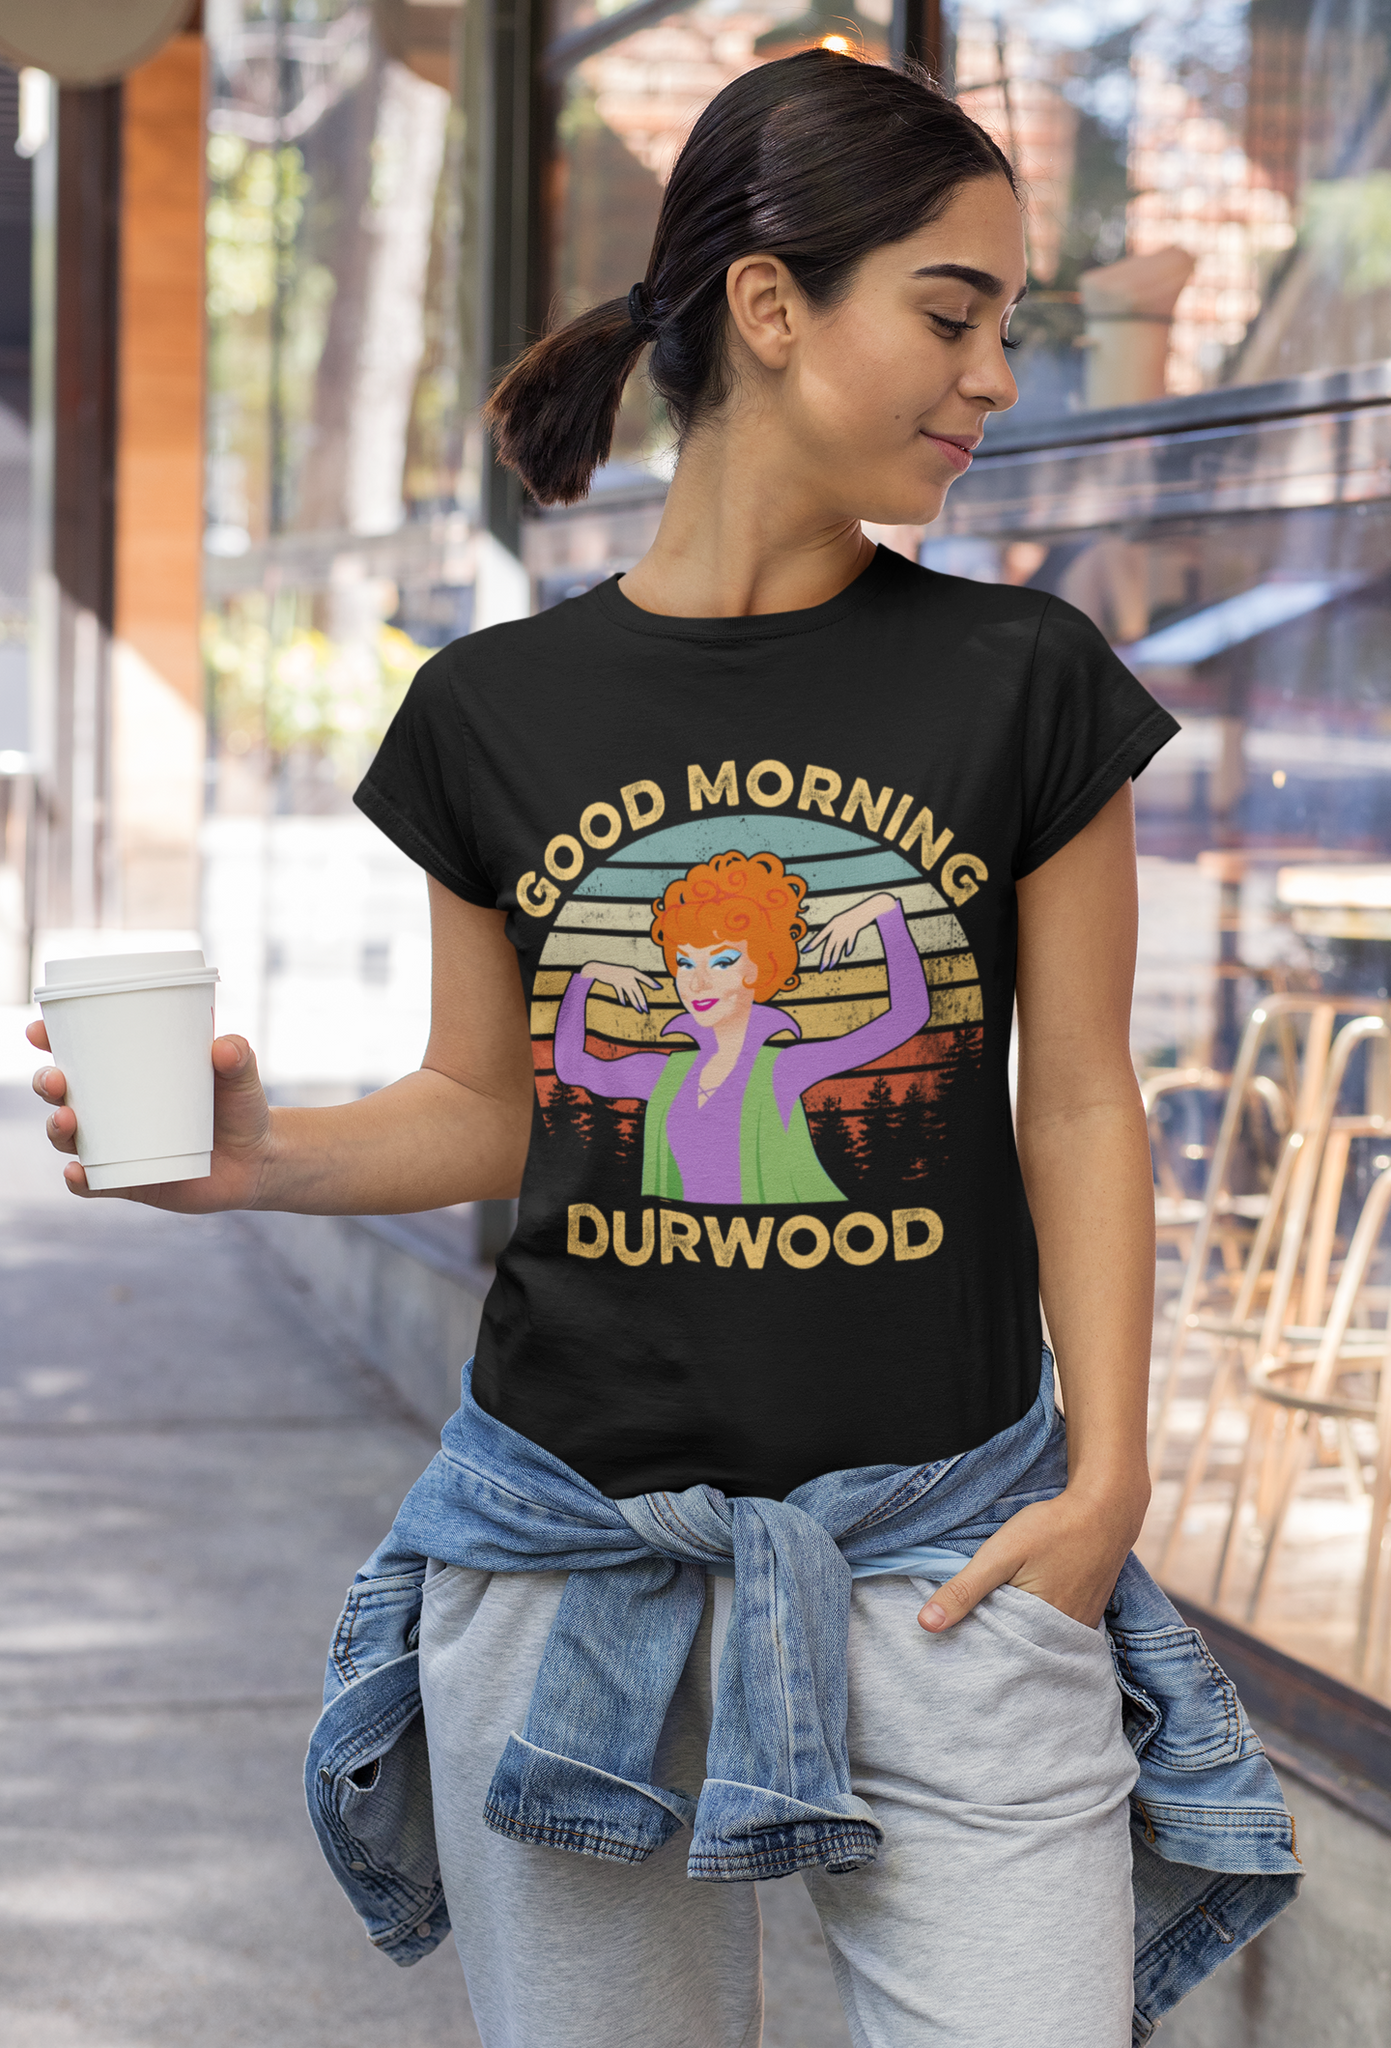 Bewitched Vintage T Shirt, Good Morning Durwood Tshirt, Endora T Shirt, Halloween Gifts